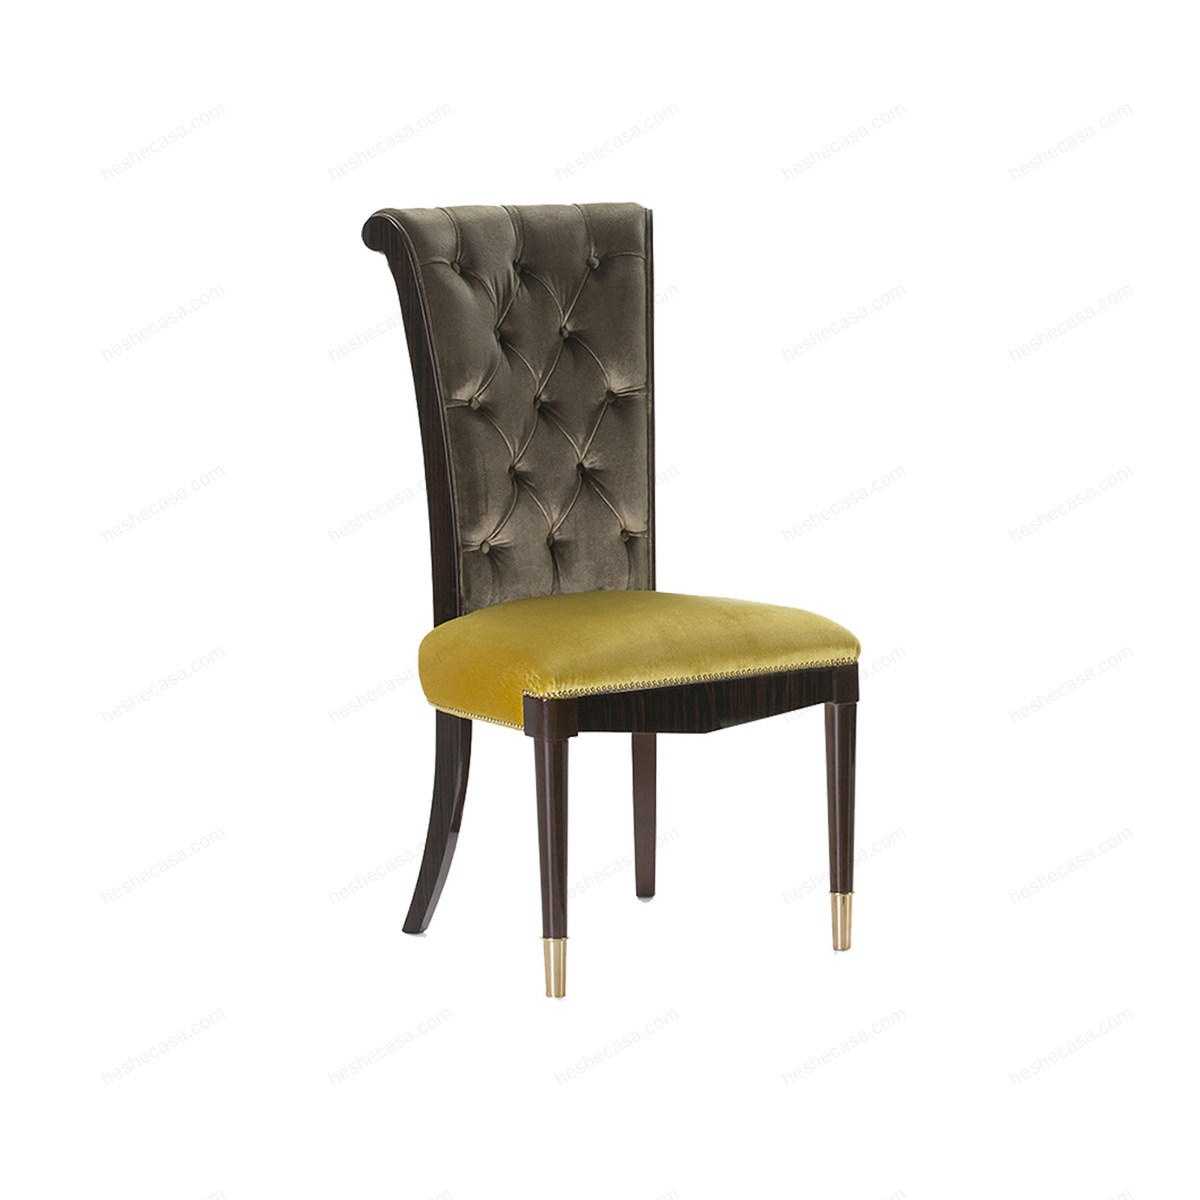 Savoy Chair 50441.0单椅